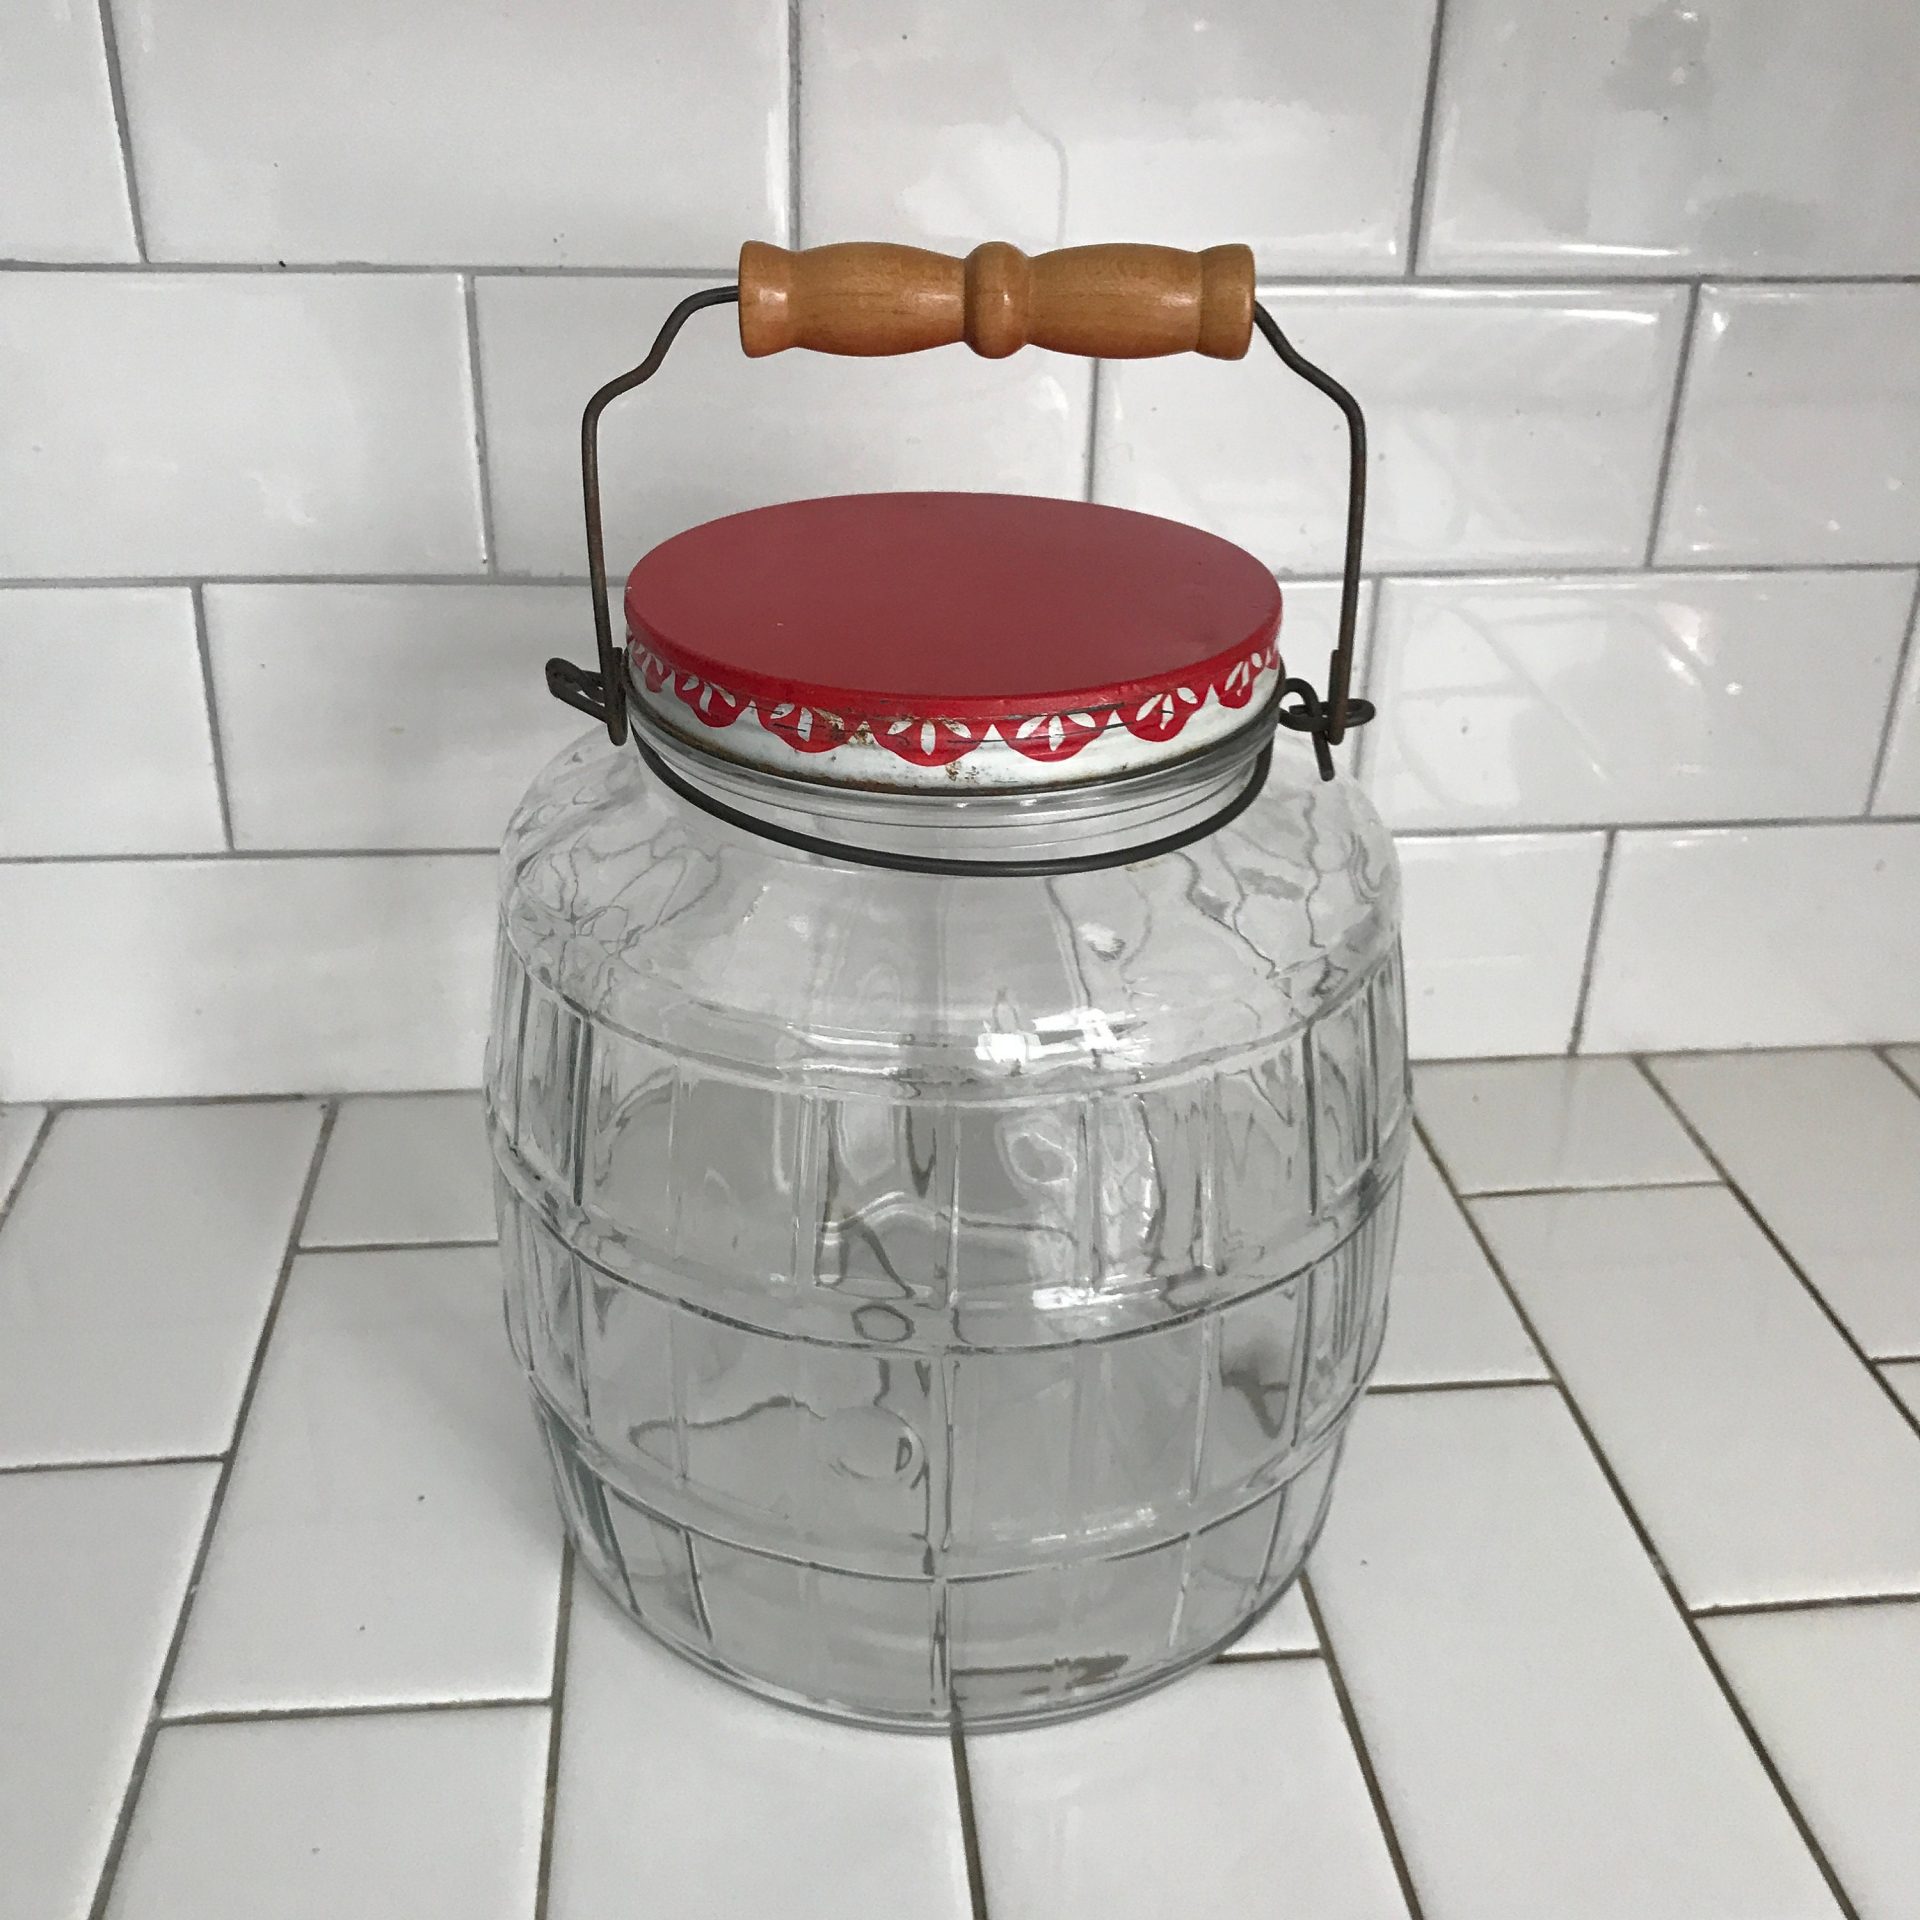 https://www.truevintageantiques.com/wp-content/uploads/2022/05/vintage-glass-kitchen-storage-jar-bottle-canister-drugstore-pickle-jar-collectible-farmhouse-display-marbles-buttons-dog-treats-display-jar-629177661-scaled.jpg